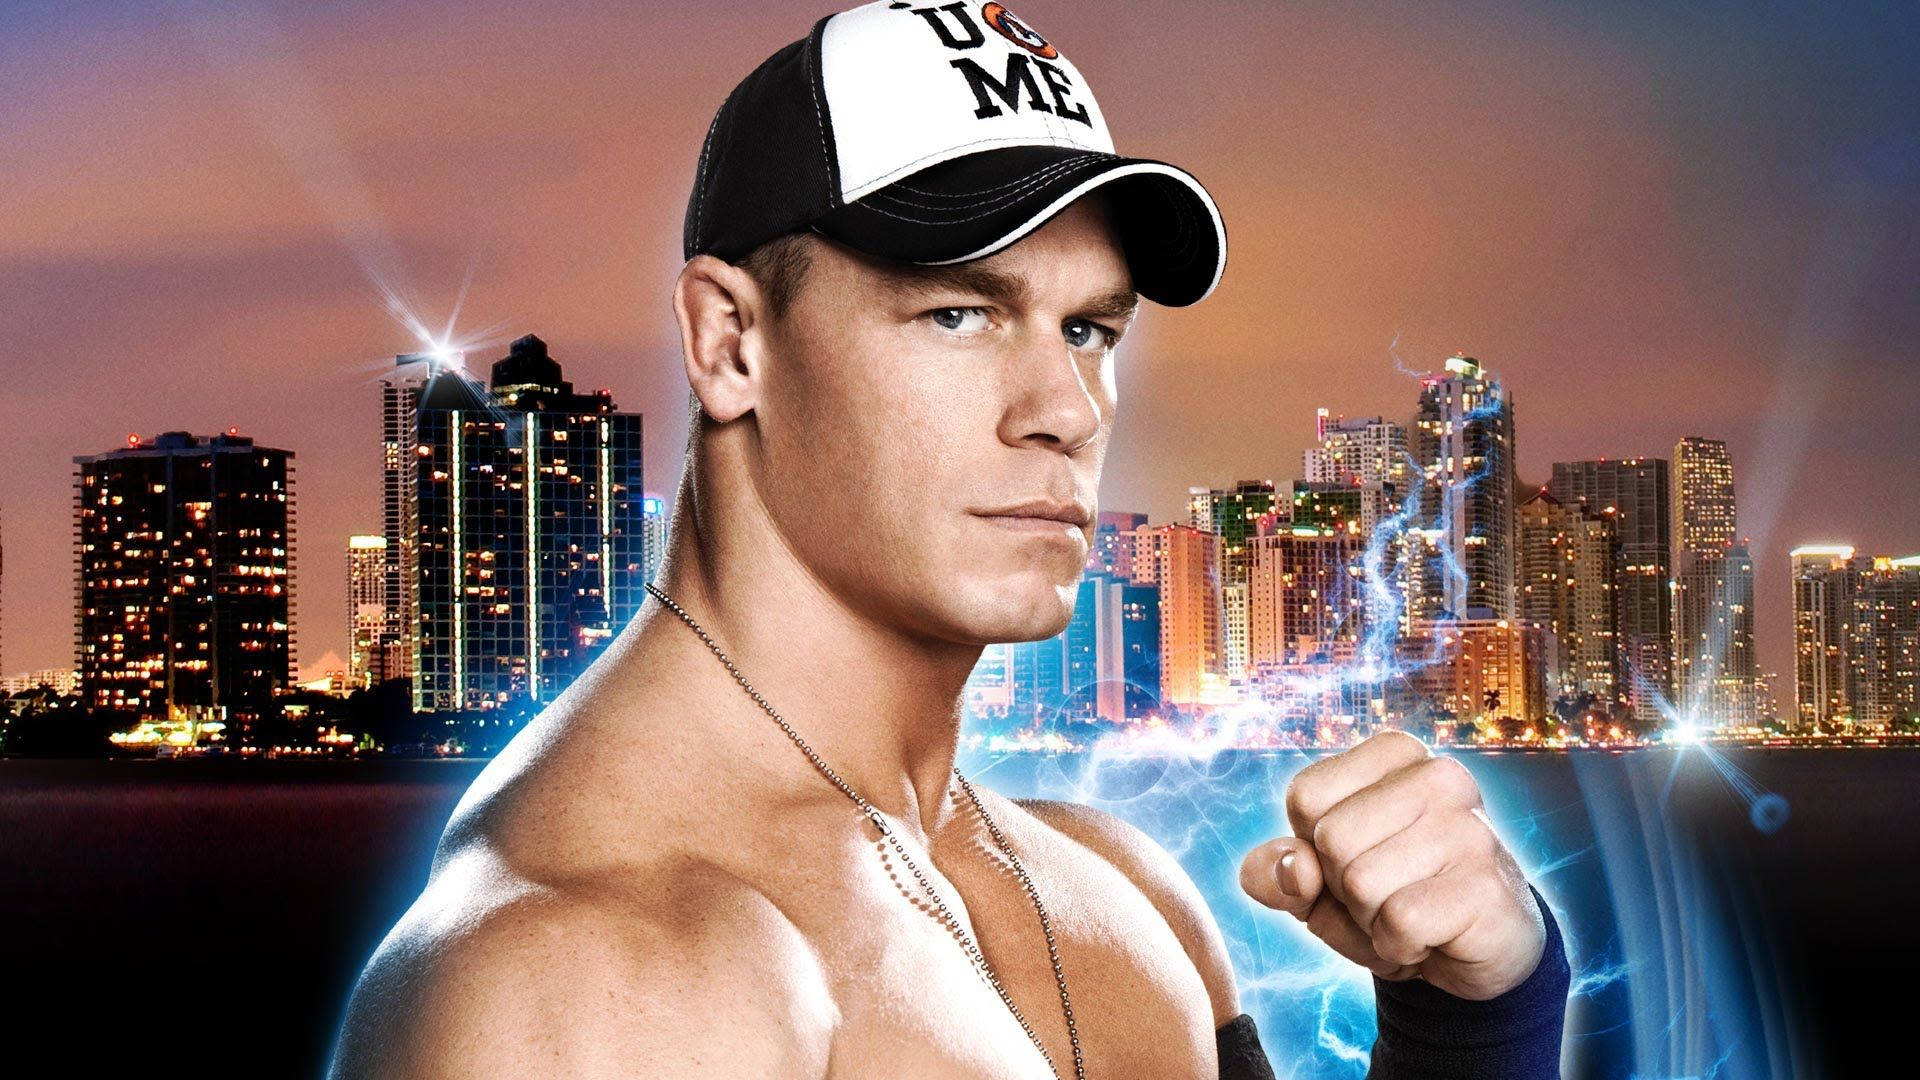 American Wwe Superstar John Cena